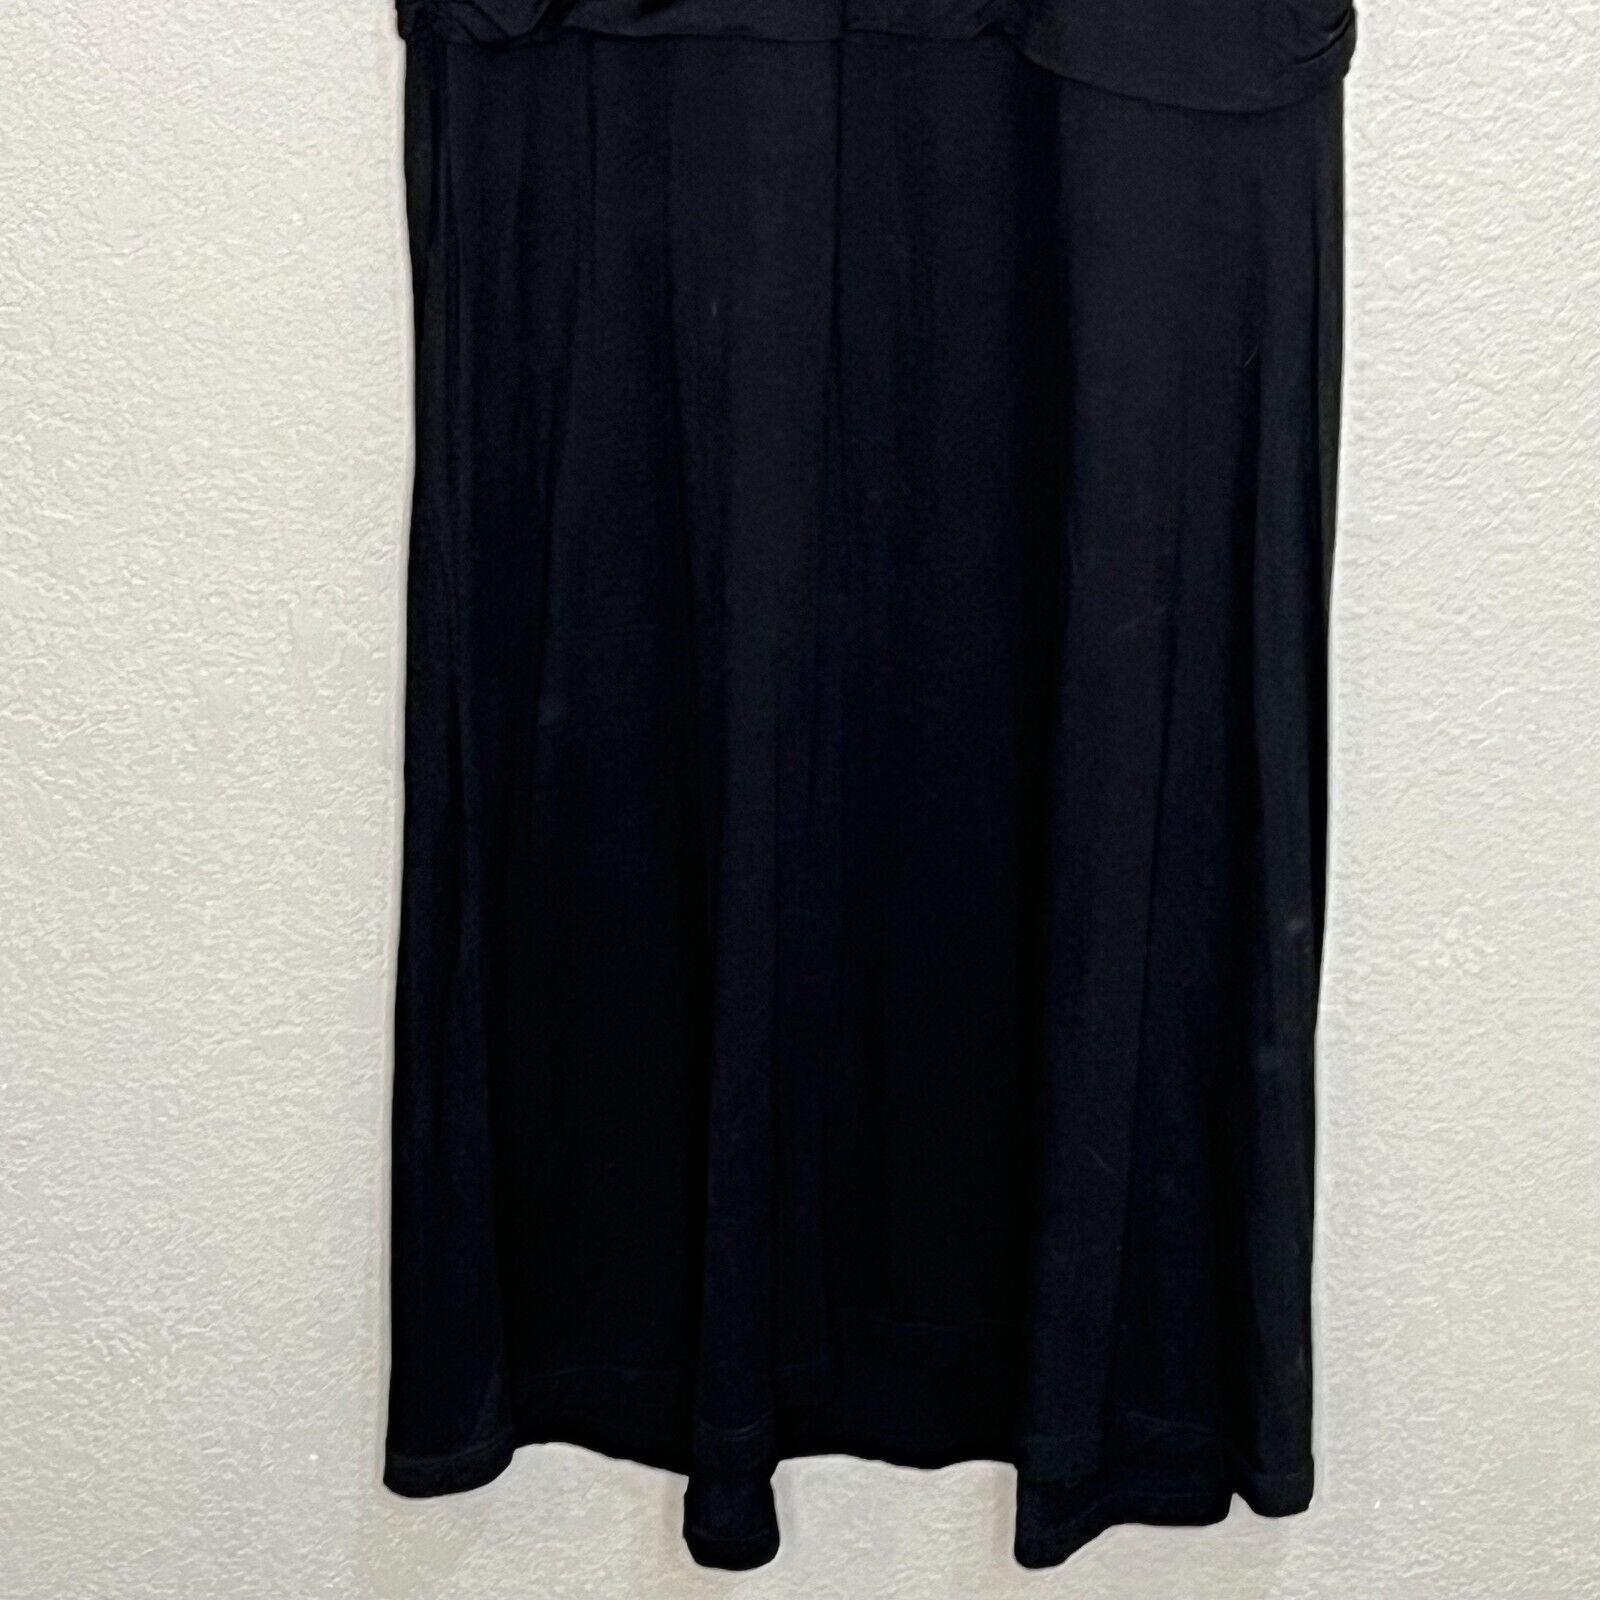 James Perse Black Tencel Jersey V Neck Midi Dress Size Large (3)